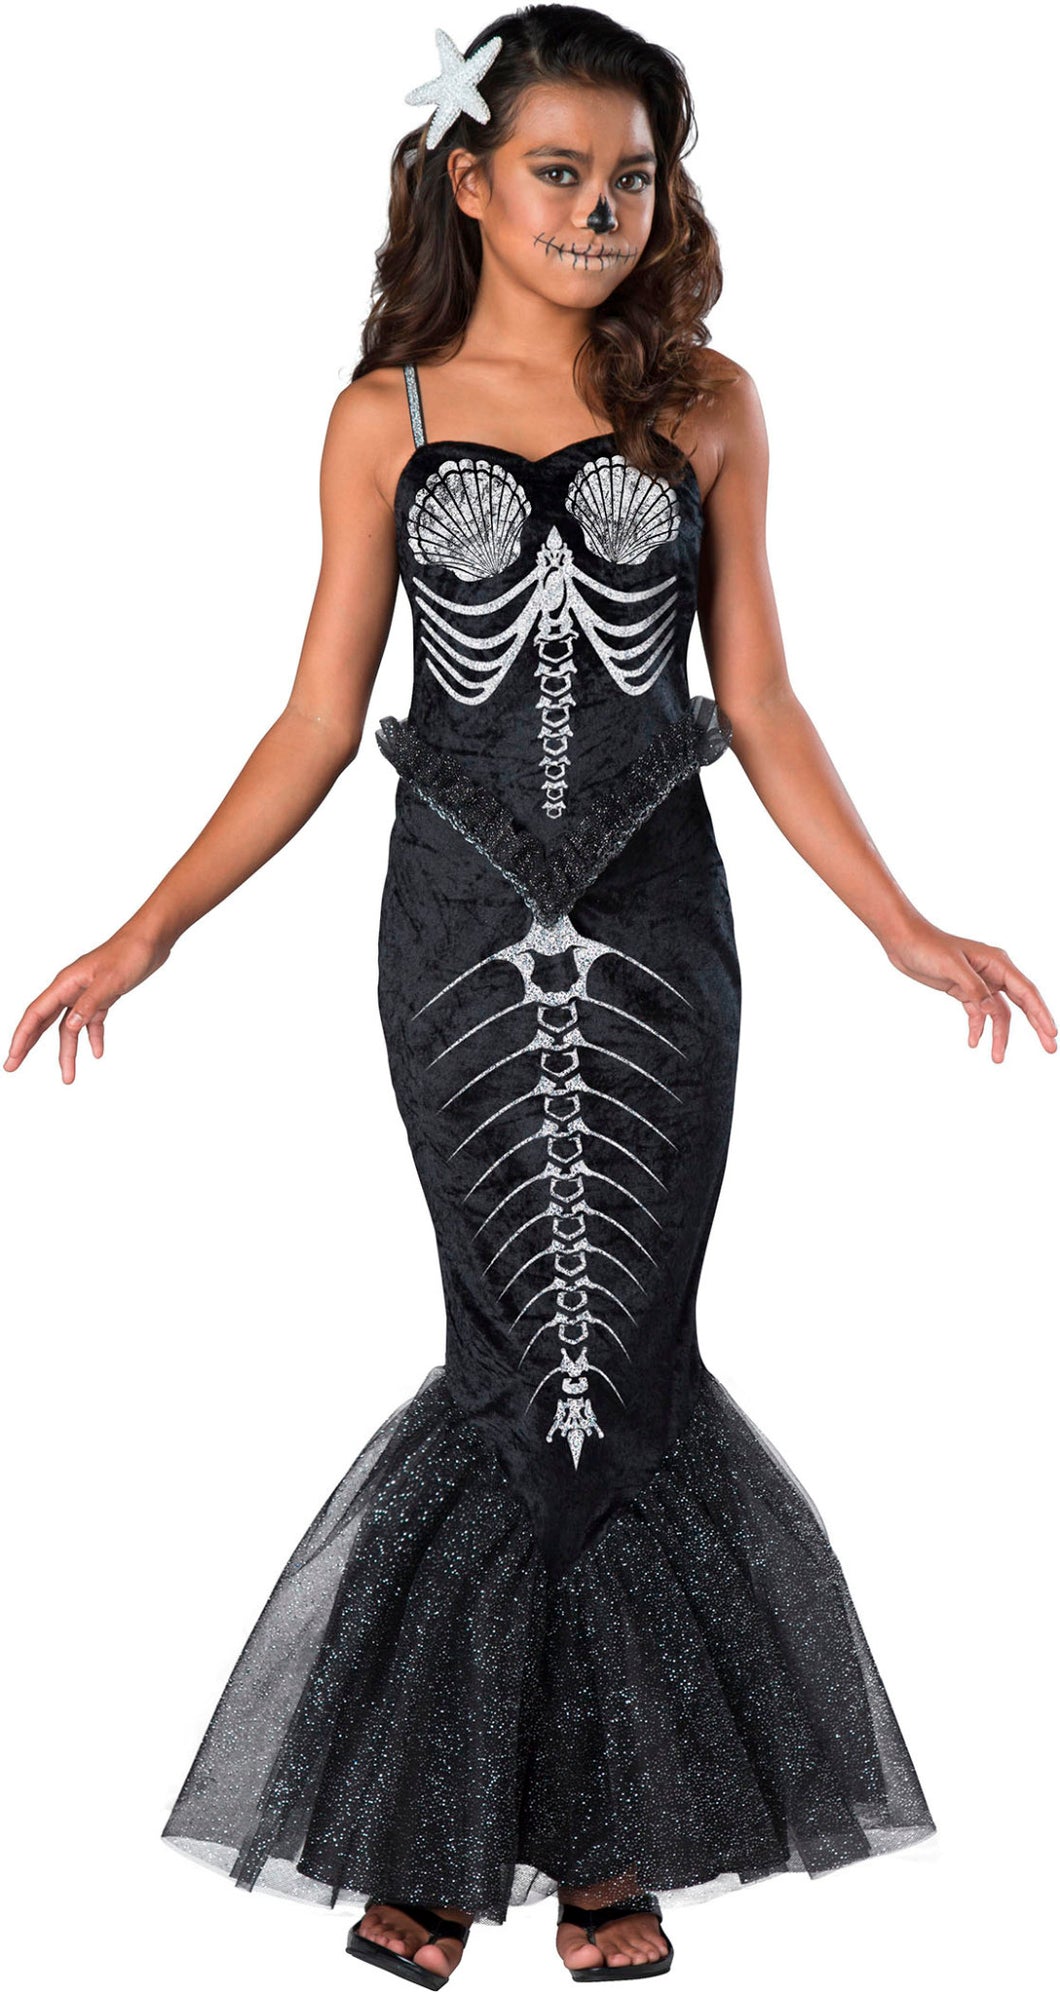 Skeleton Mermaid CHILD Girls Costume NEW